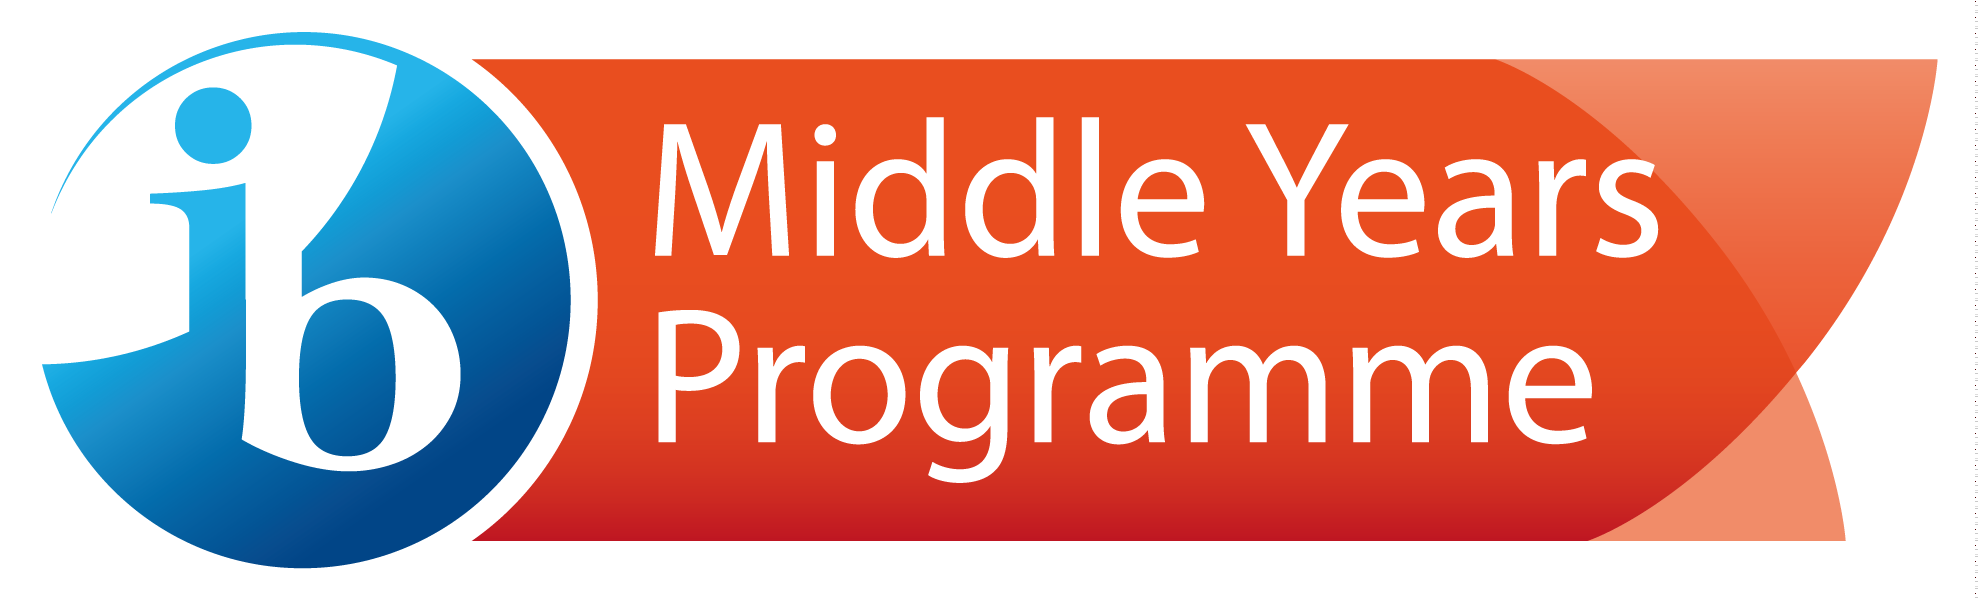 Middle Years Programme IB Logo